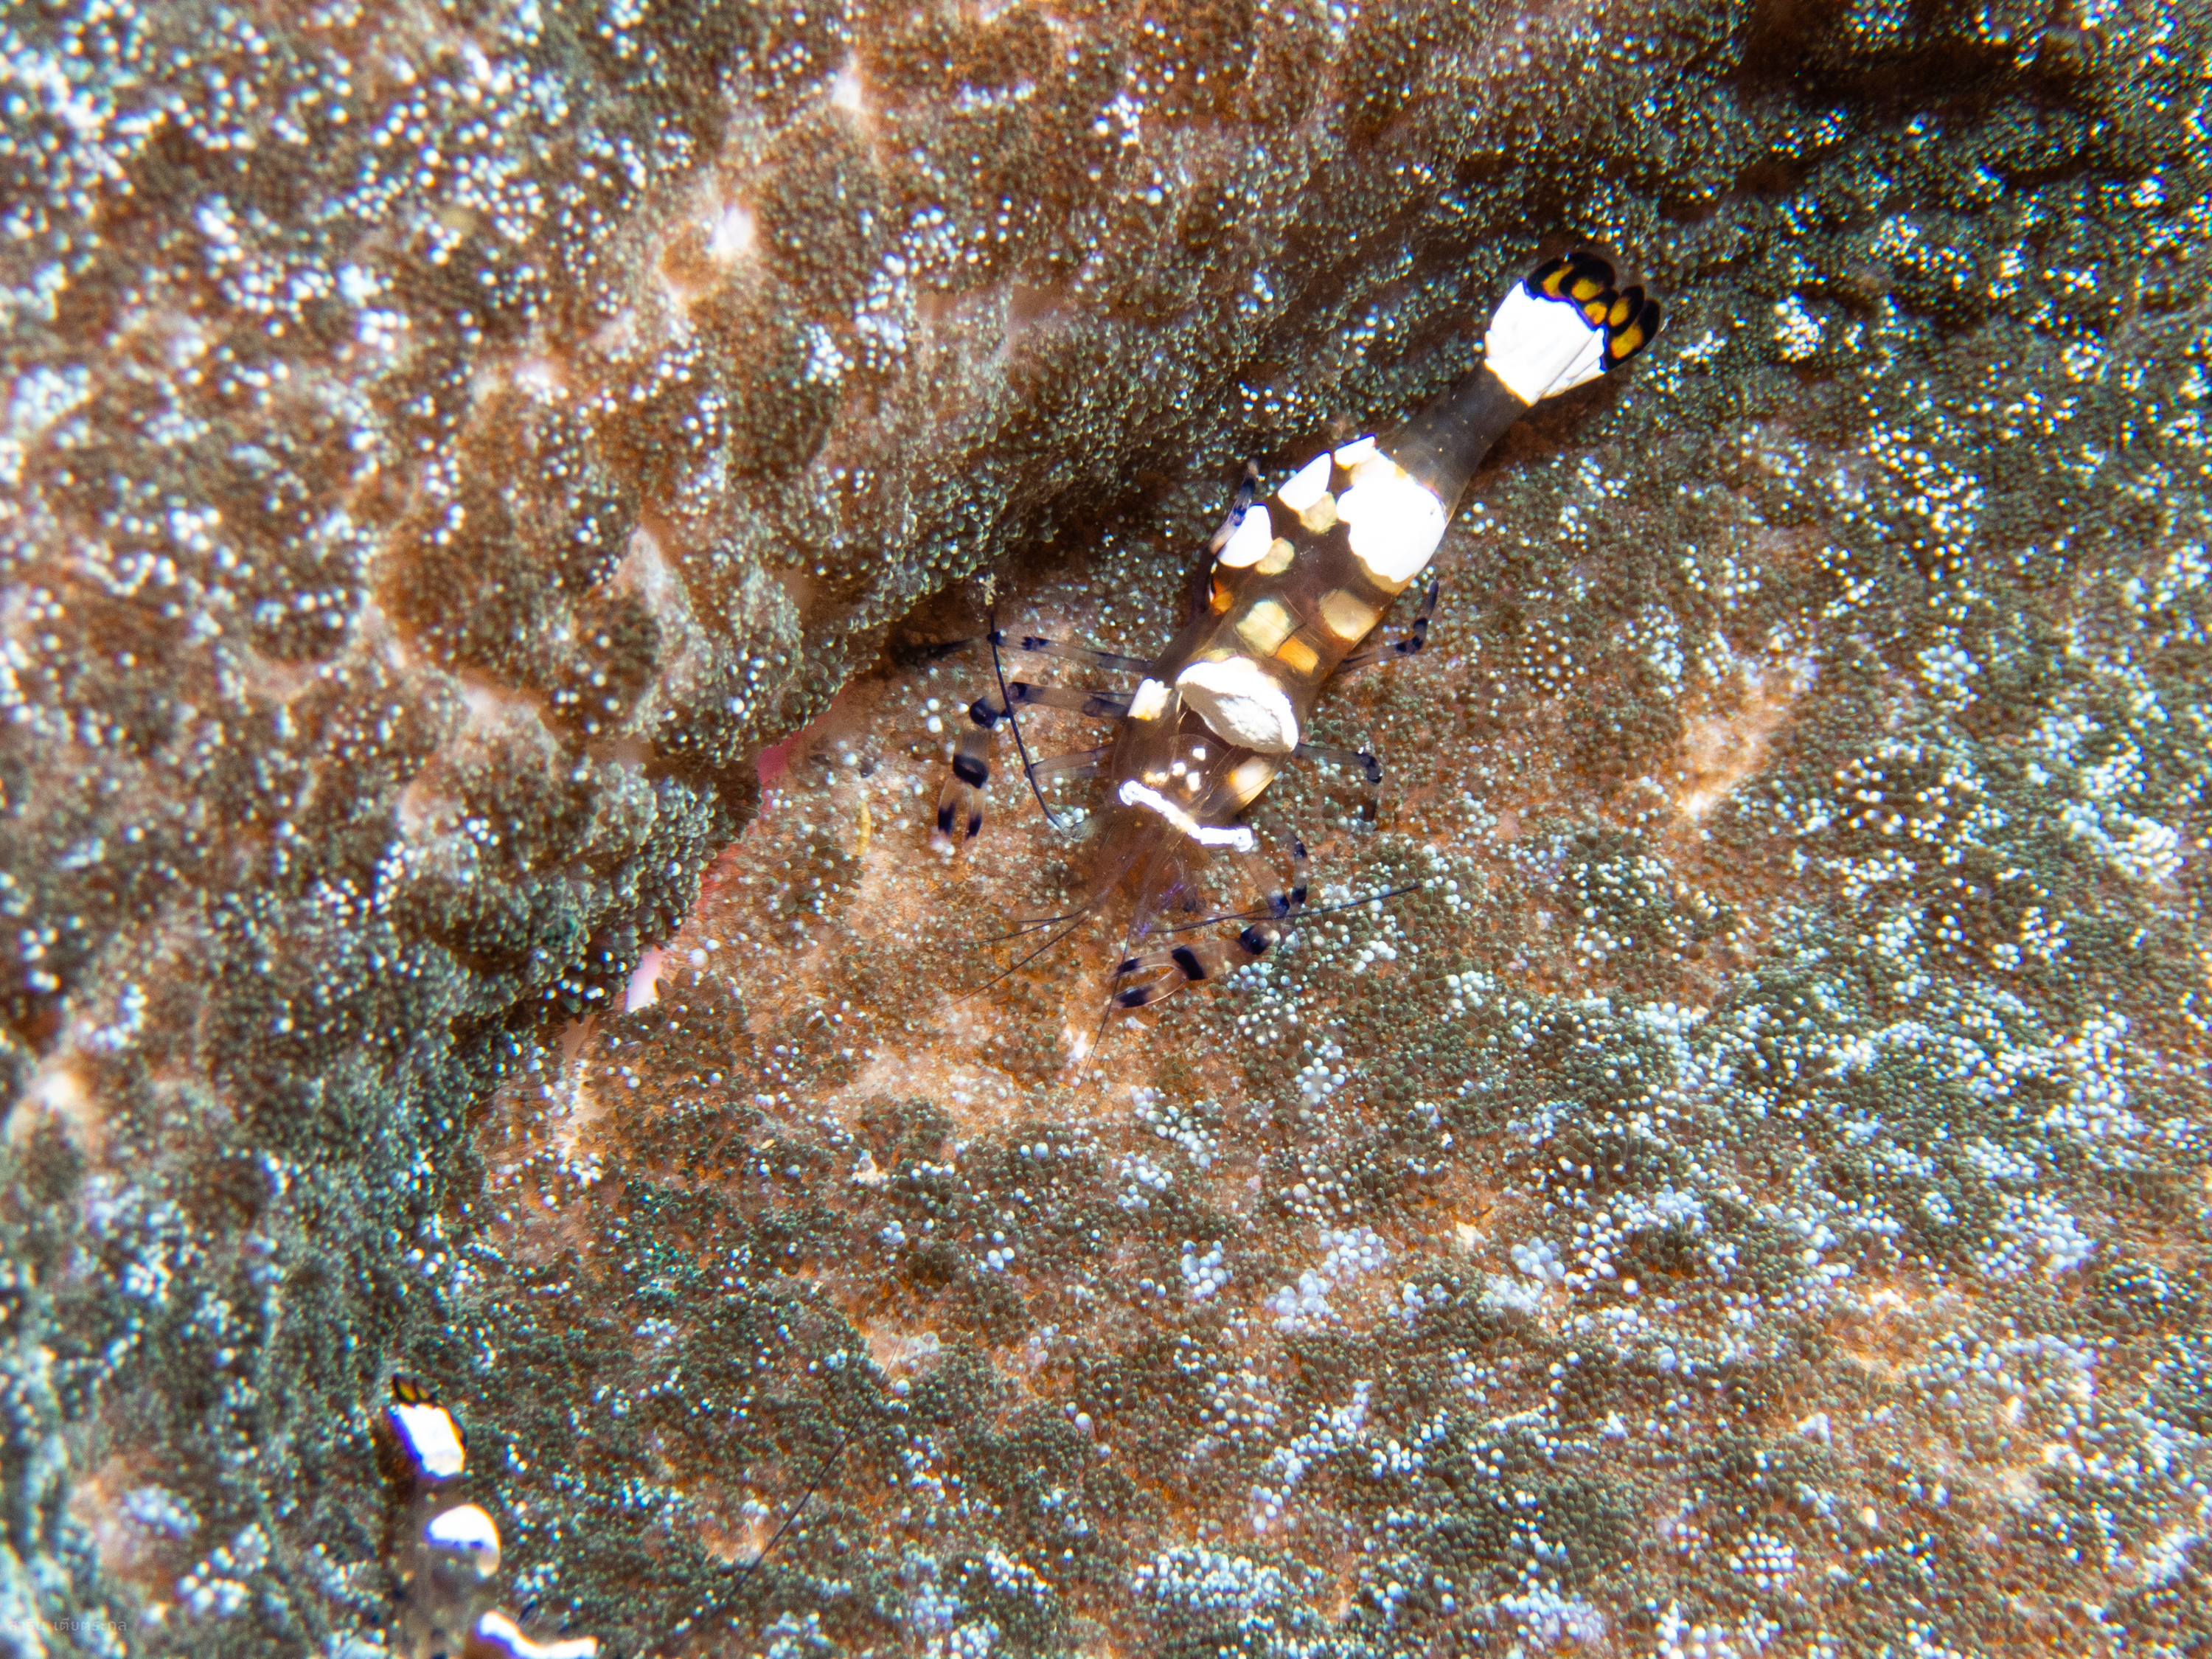 Glass anemone shrimp (*Periclimenes brevecarpalis)*